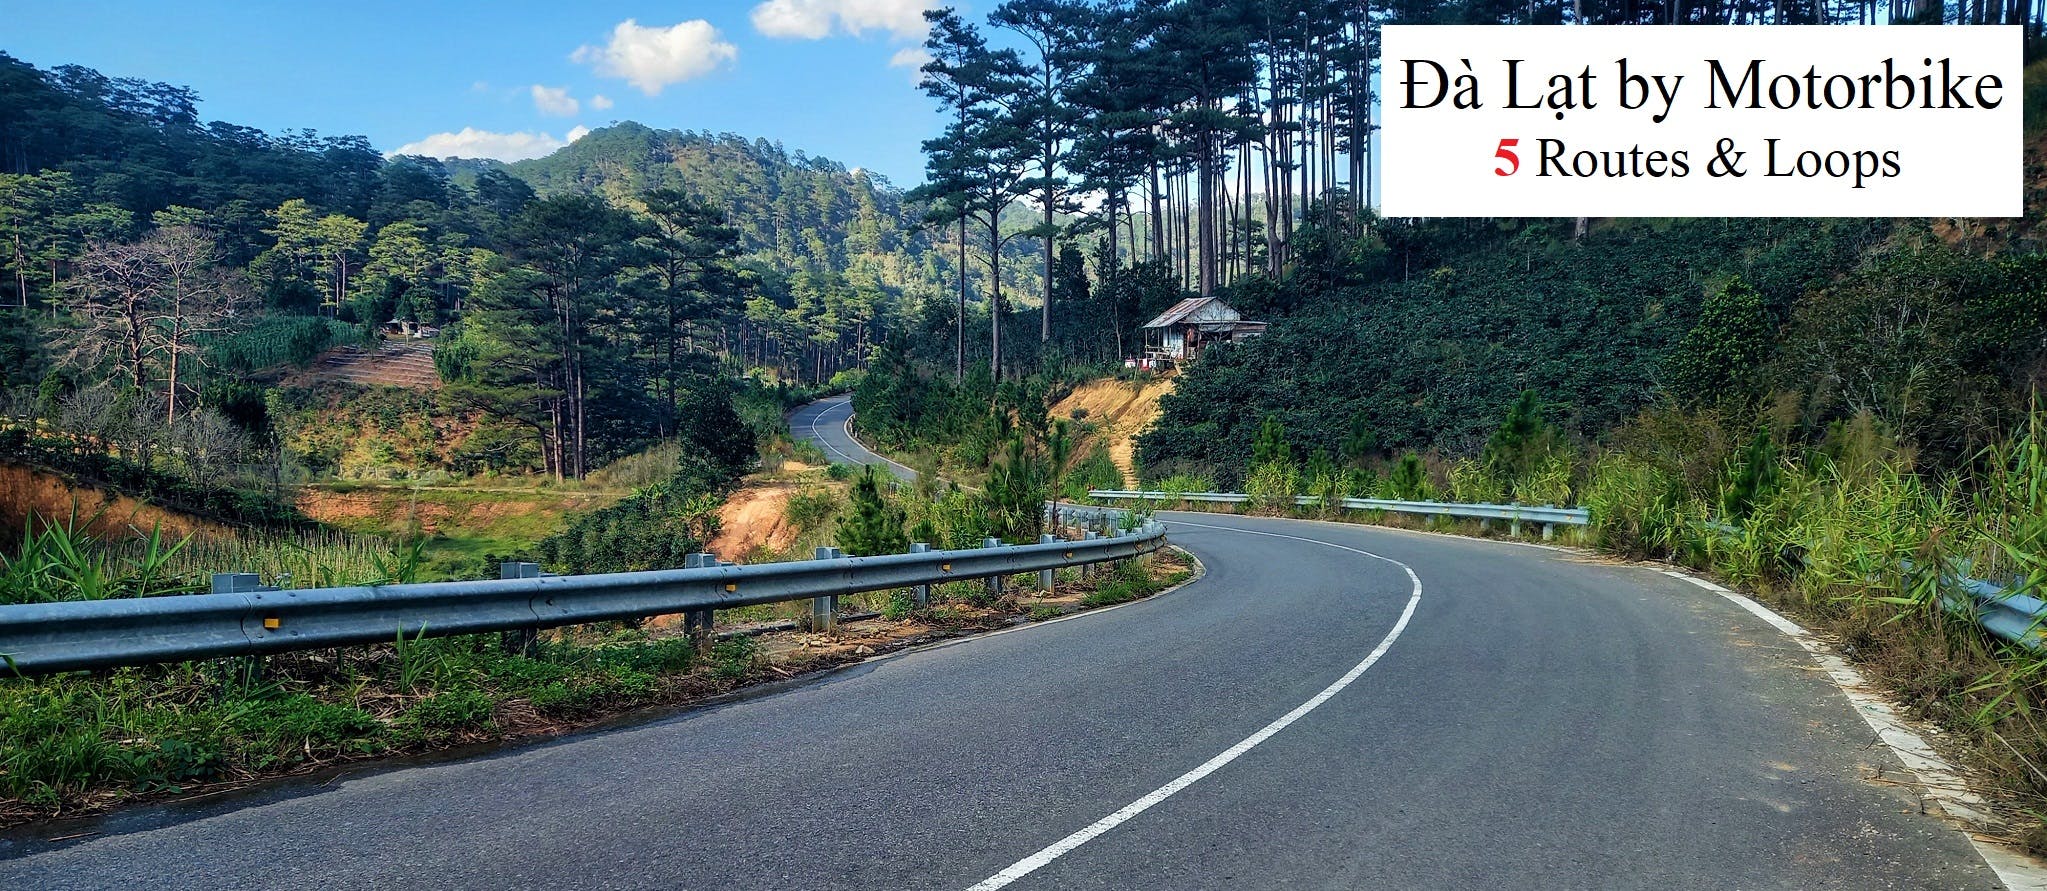 Dalat by Motorbike: 5 Routes & Loops